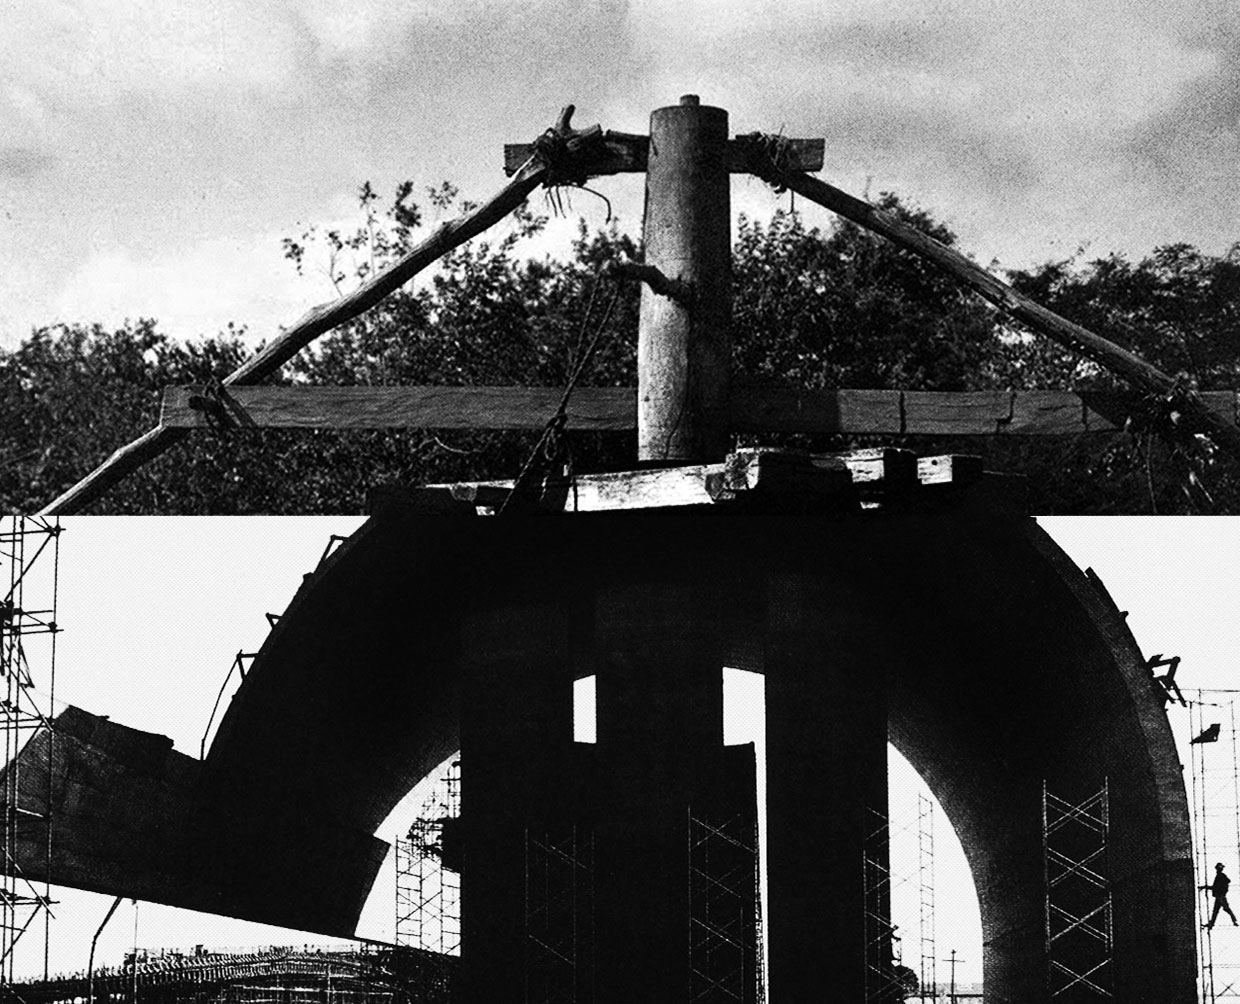 Sugarcane mill in Fazenda do Serrote, Piaui, Brazil, 1912, and the construction of the Latin American Memorial, architecture by Oscar Niemeyer, São Paulo, Brazil